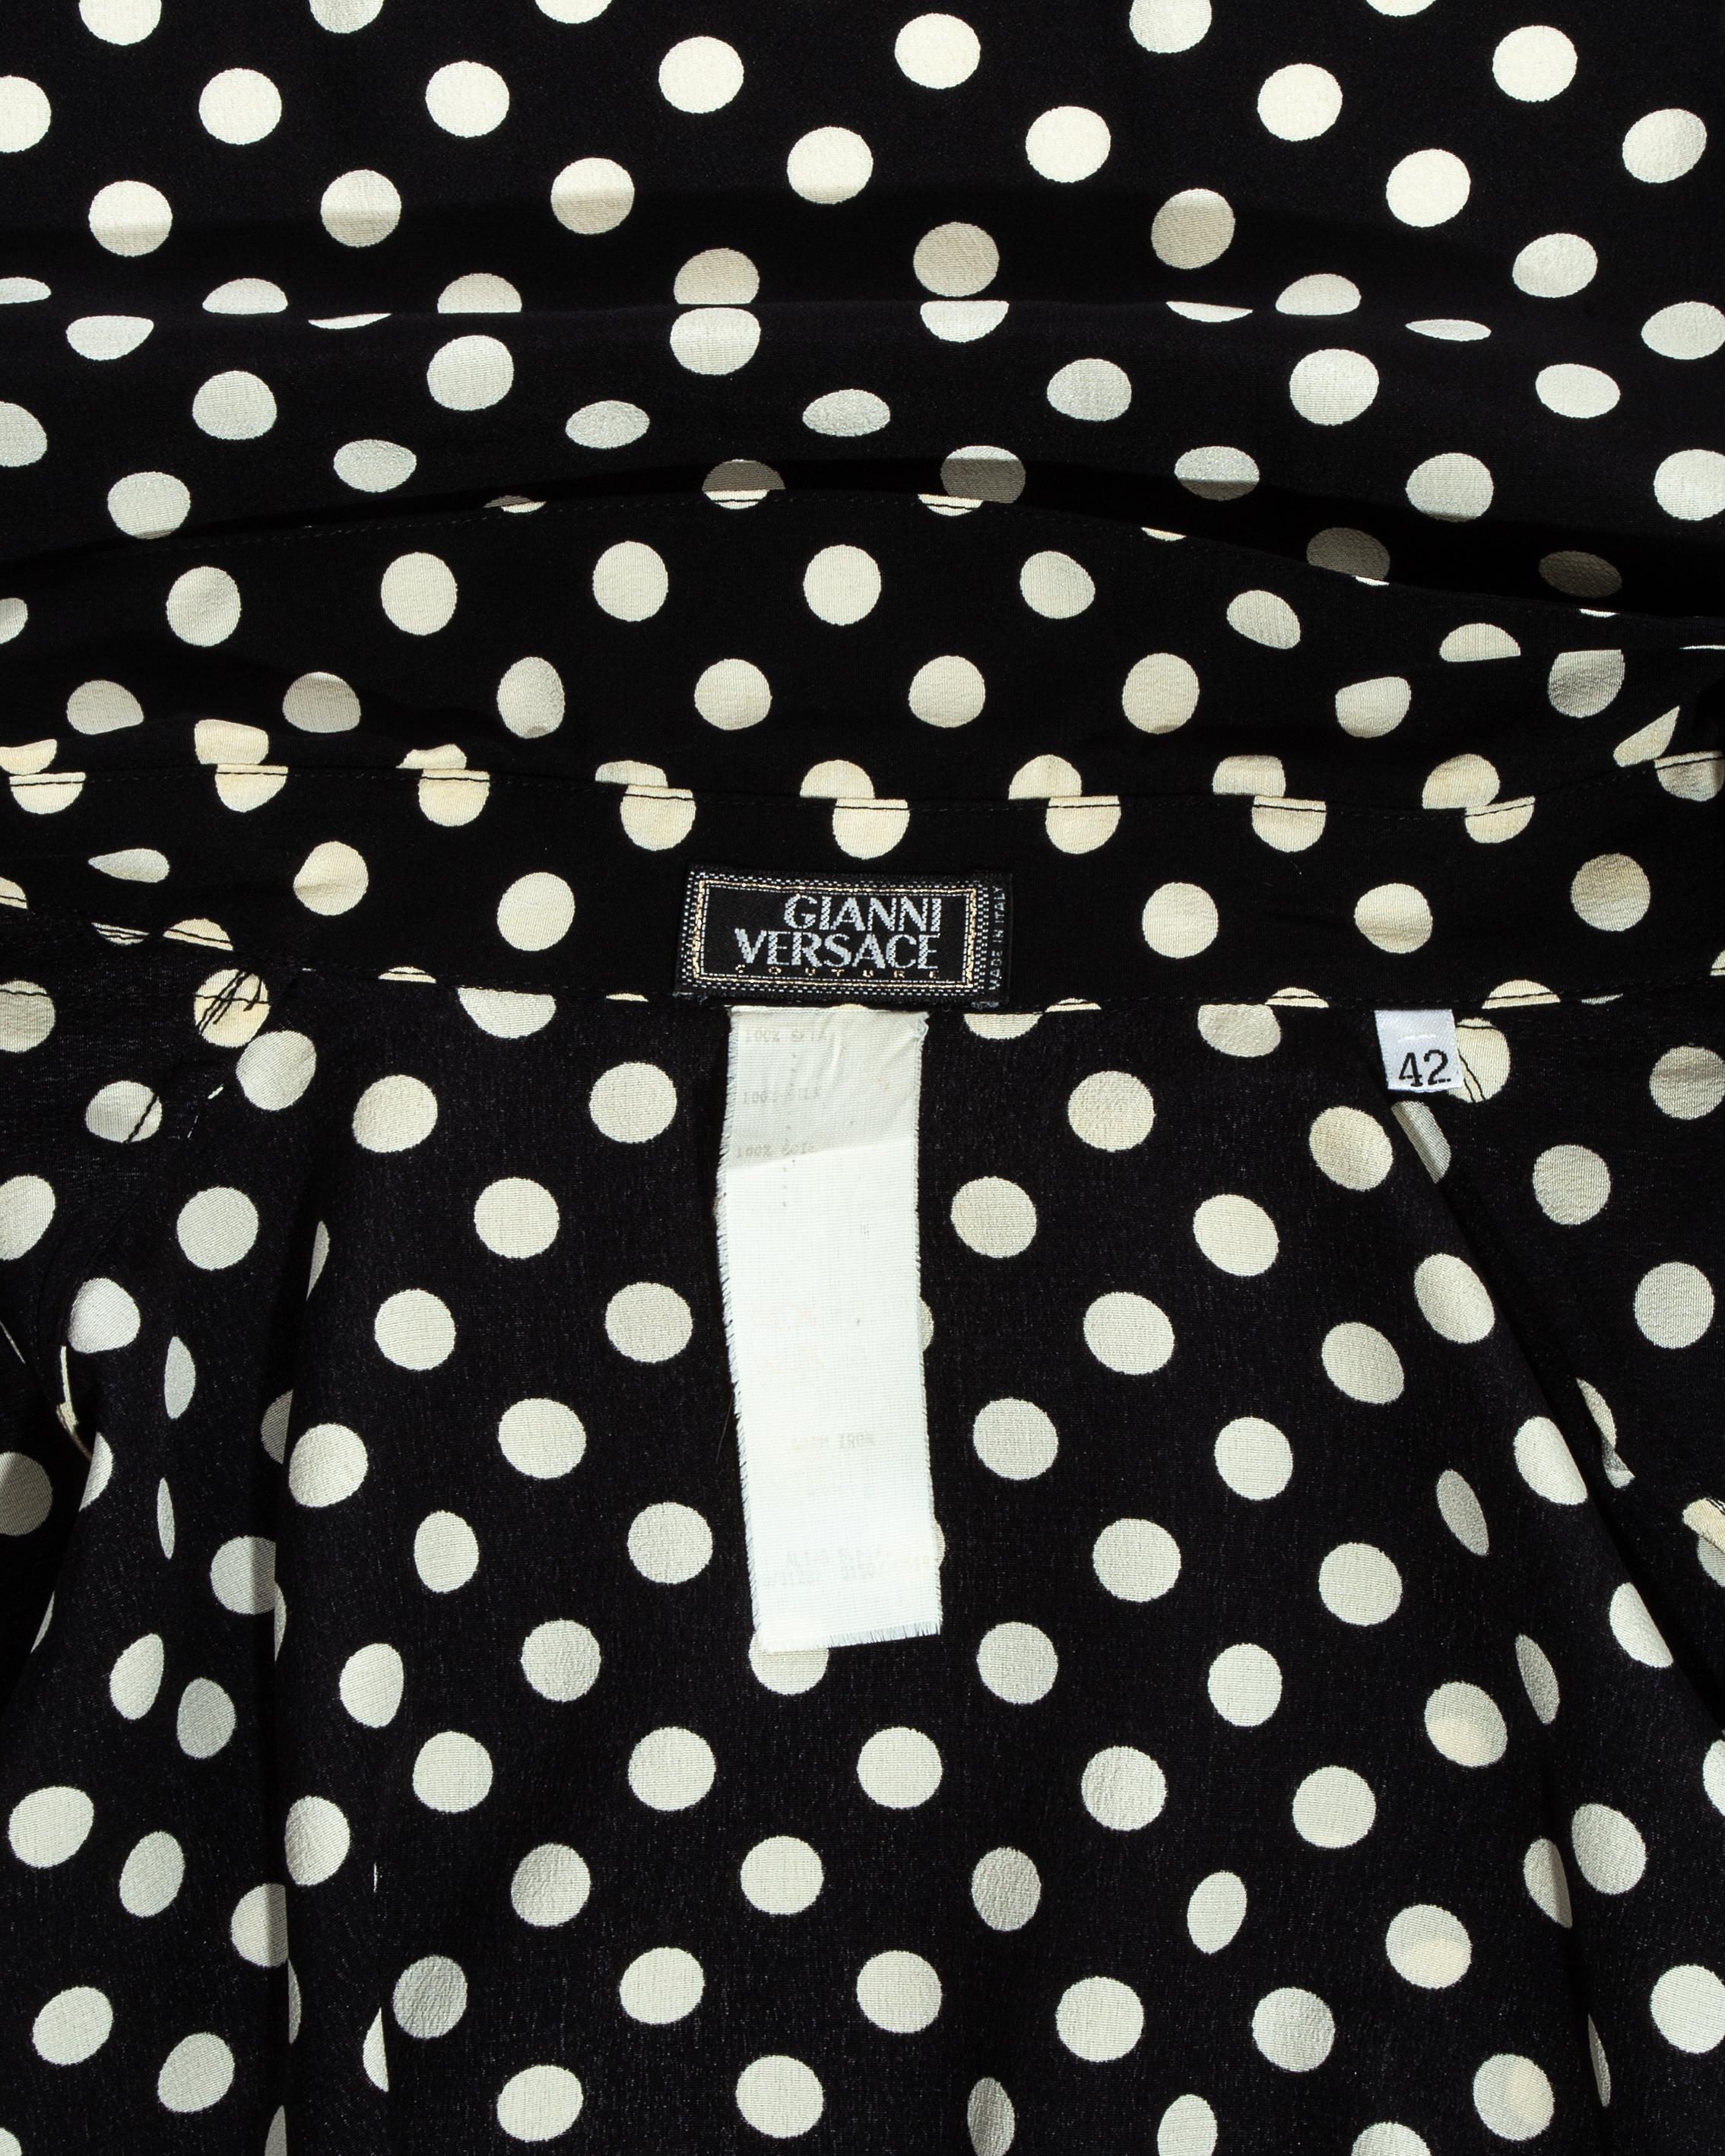 Gianni Versace black and white polkadot silk ruffled shirt dress, ss 1993 5